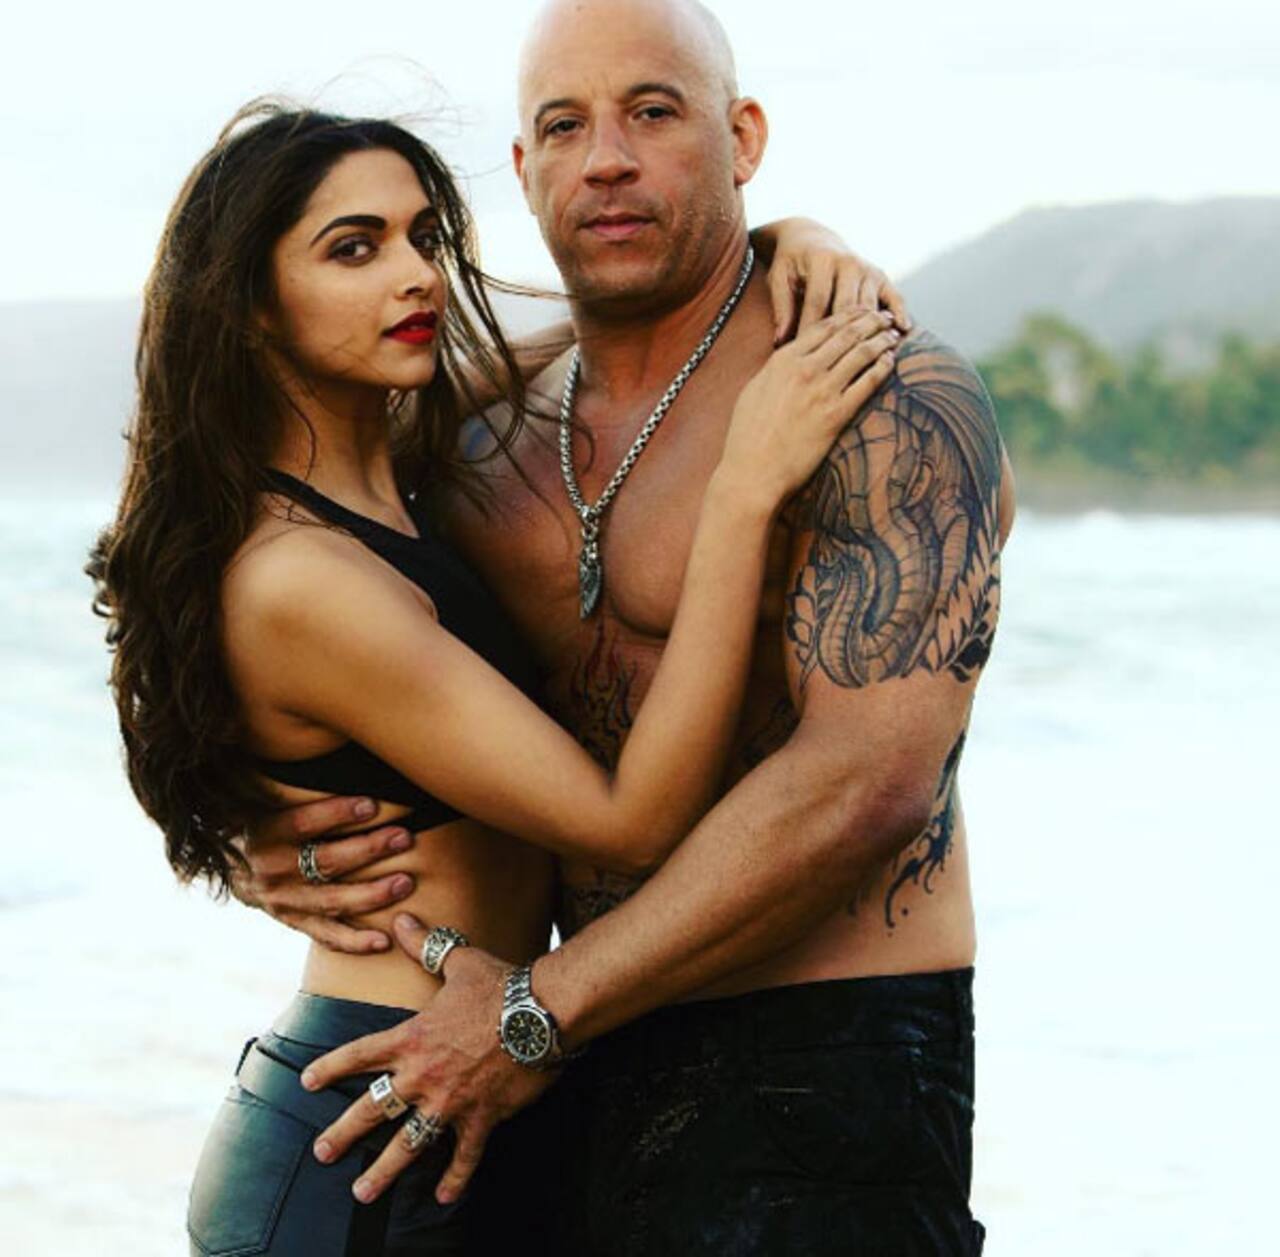 Get ready to see Vin Diesel in a Sherwani courtesy Deepika Padukone!